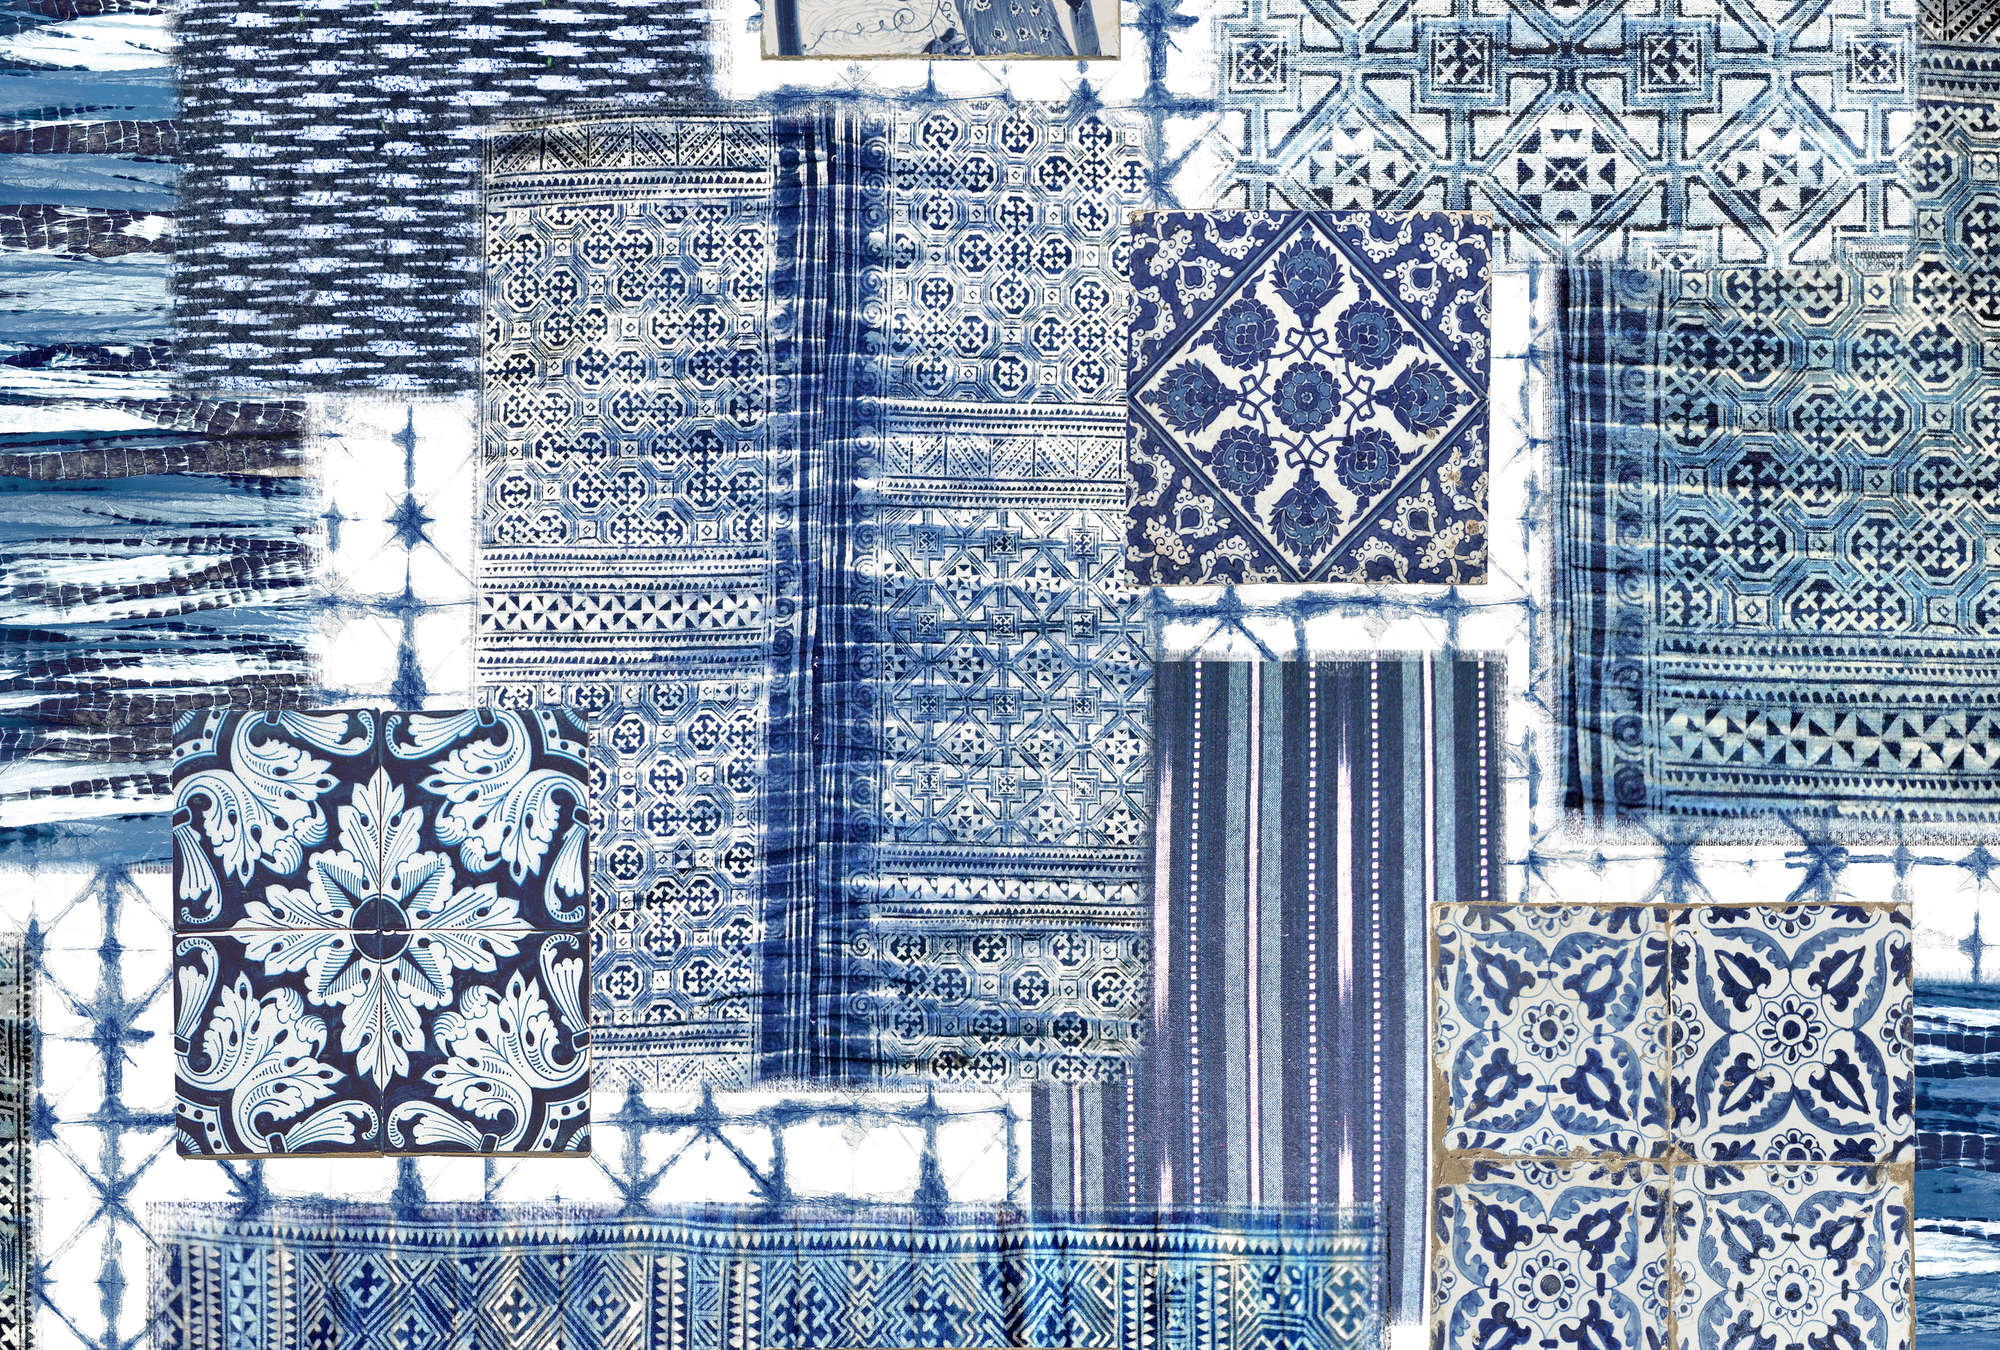             Patchwork Behang, Delftse Tegels & Patroon - Blauw, Wit
        